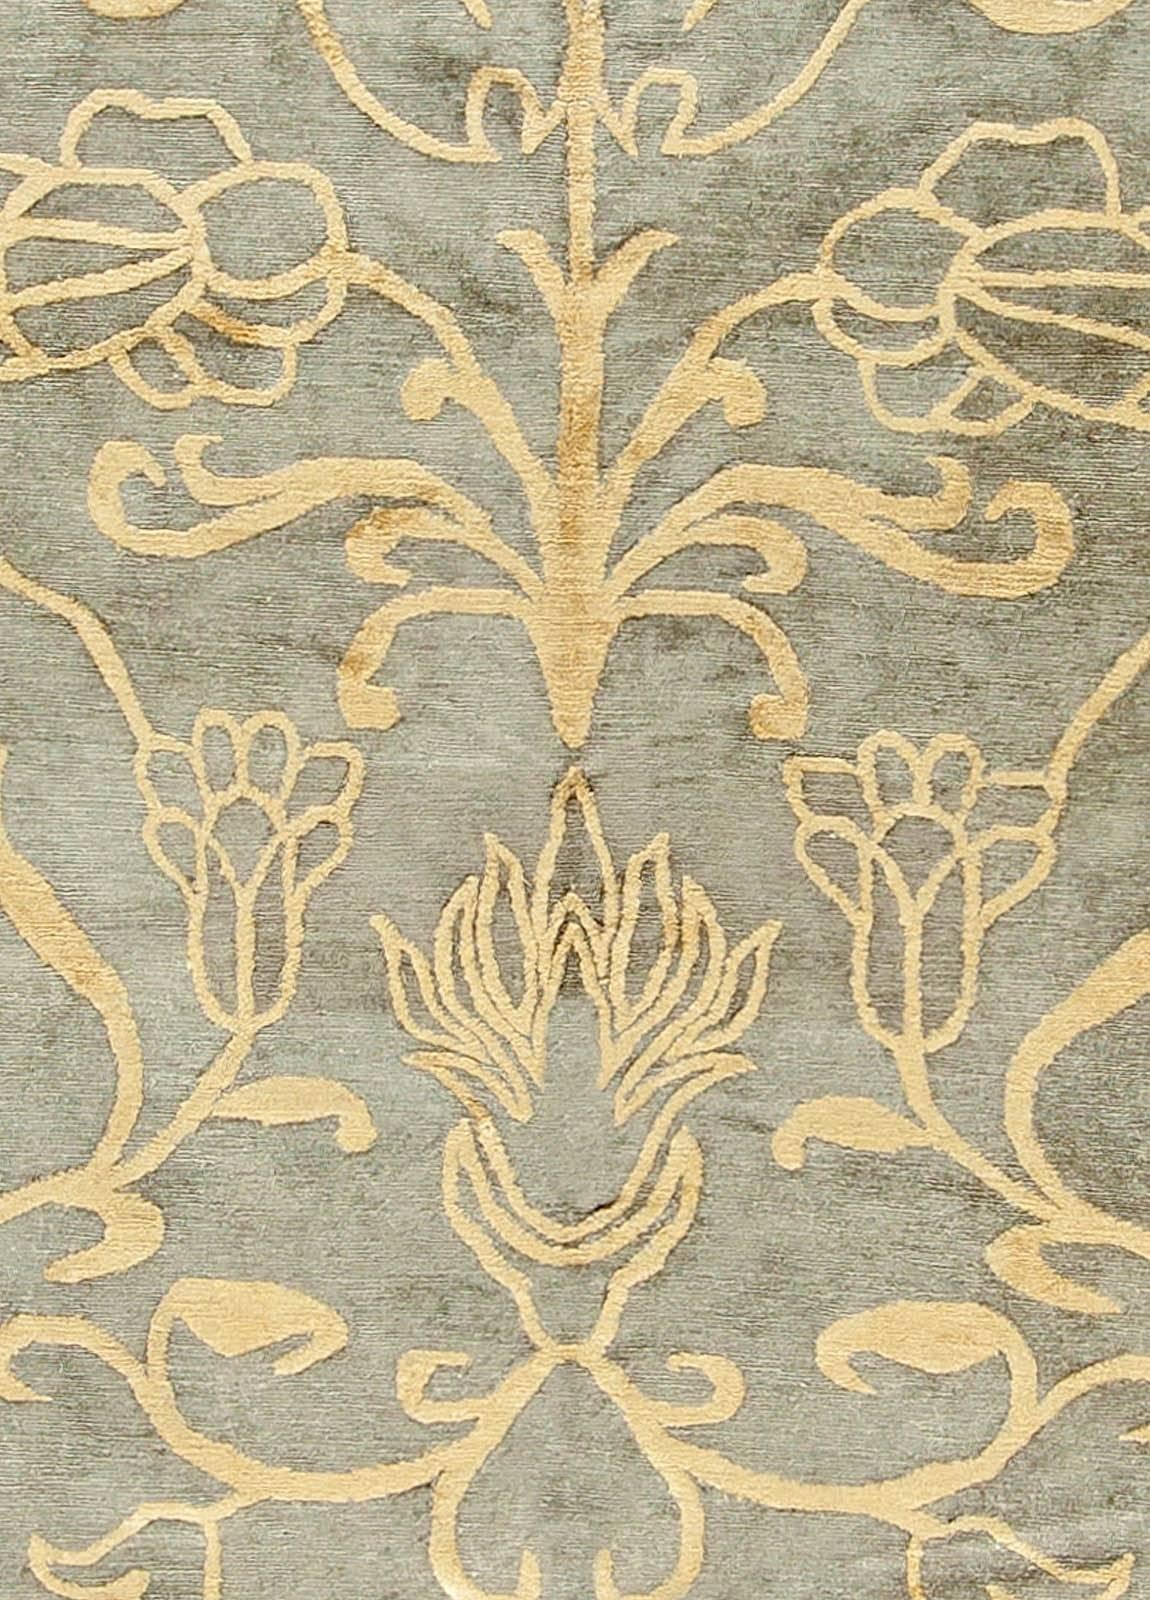 Traditional European inspired beige handmade rug by Doris Leslie Blau.
Size: 11'7